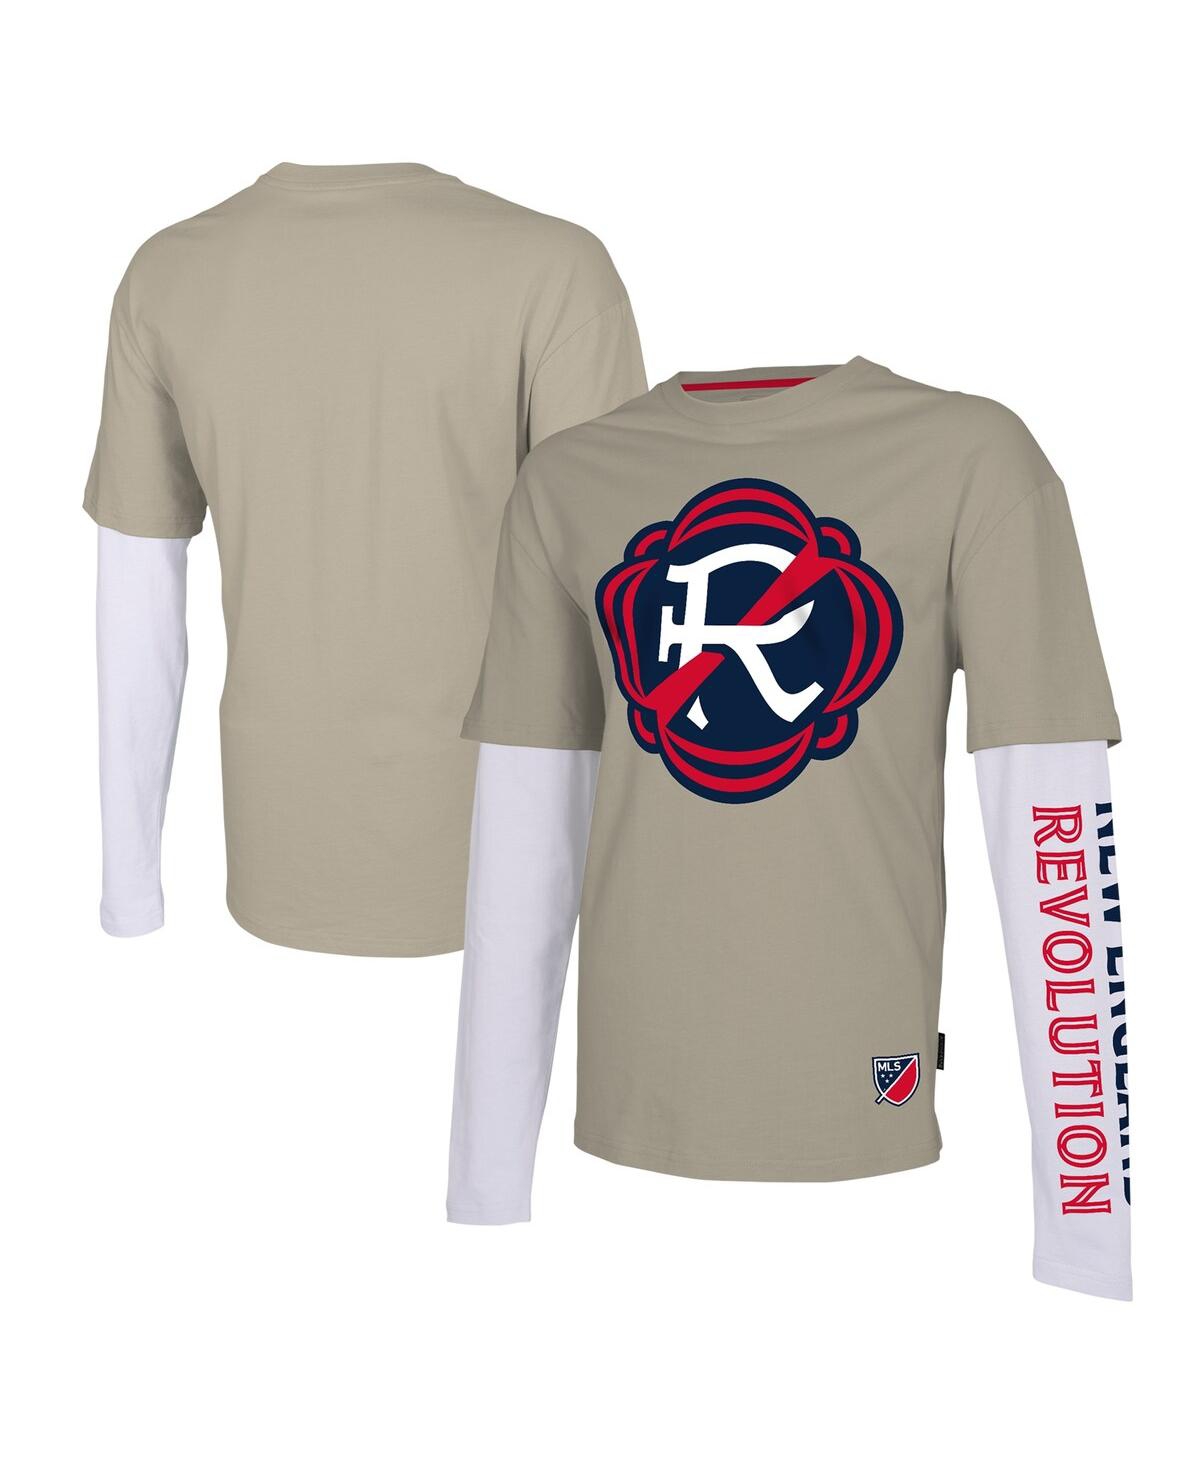 Stadium Essentials Men's  Tan New England Revolution Status Long Sleeve T-shirt